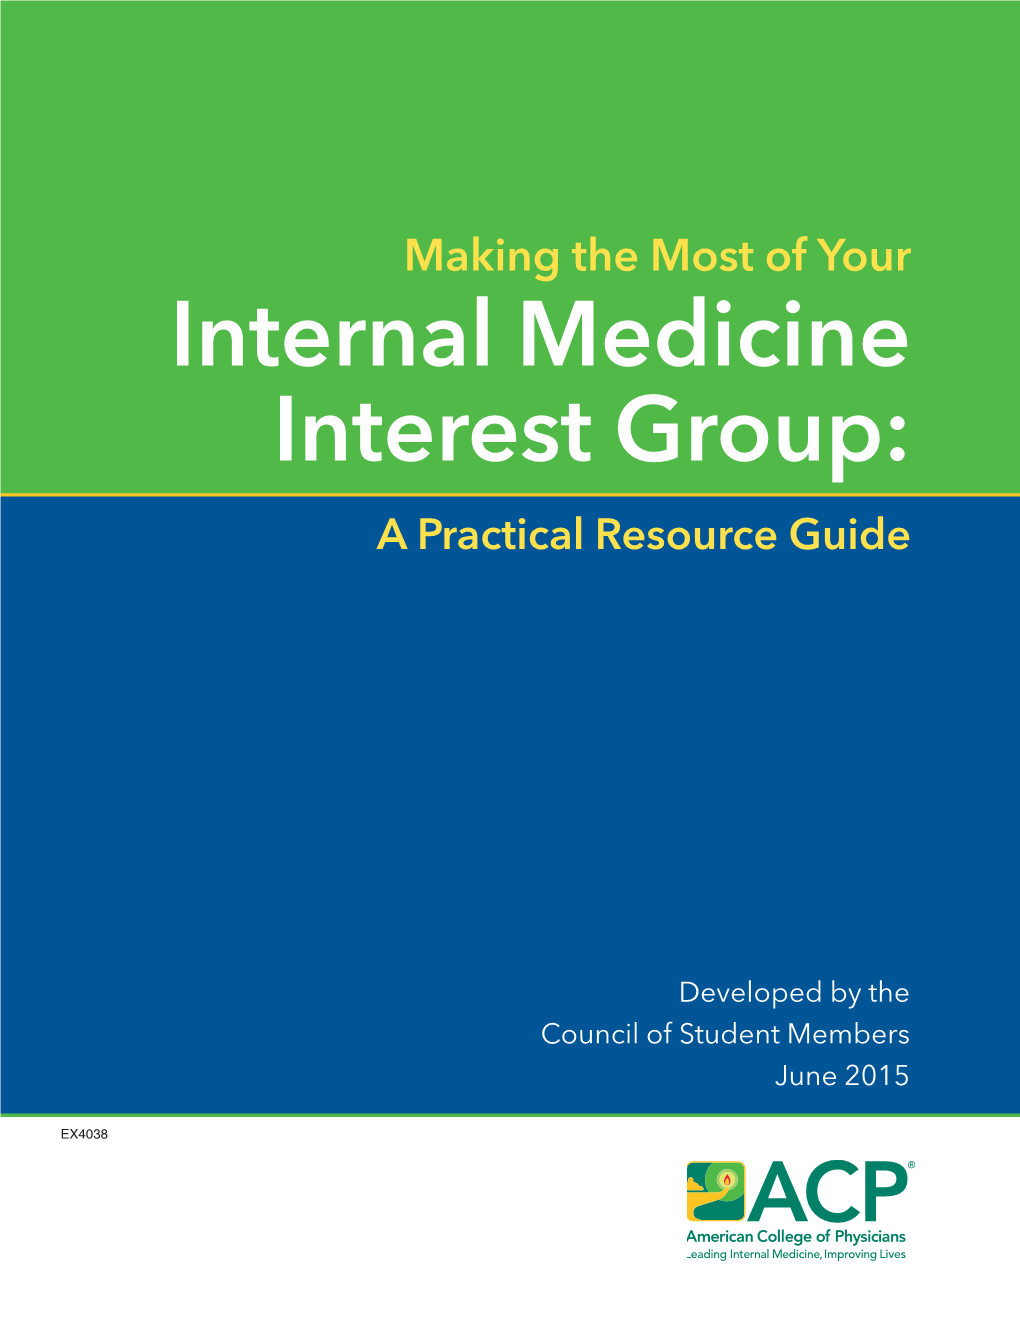 Internal Medicine Interest Group Resource Guide